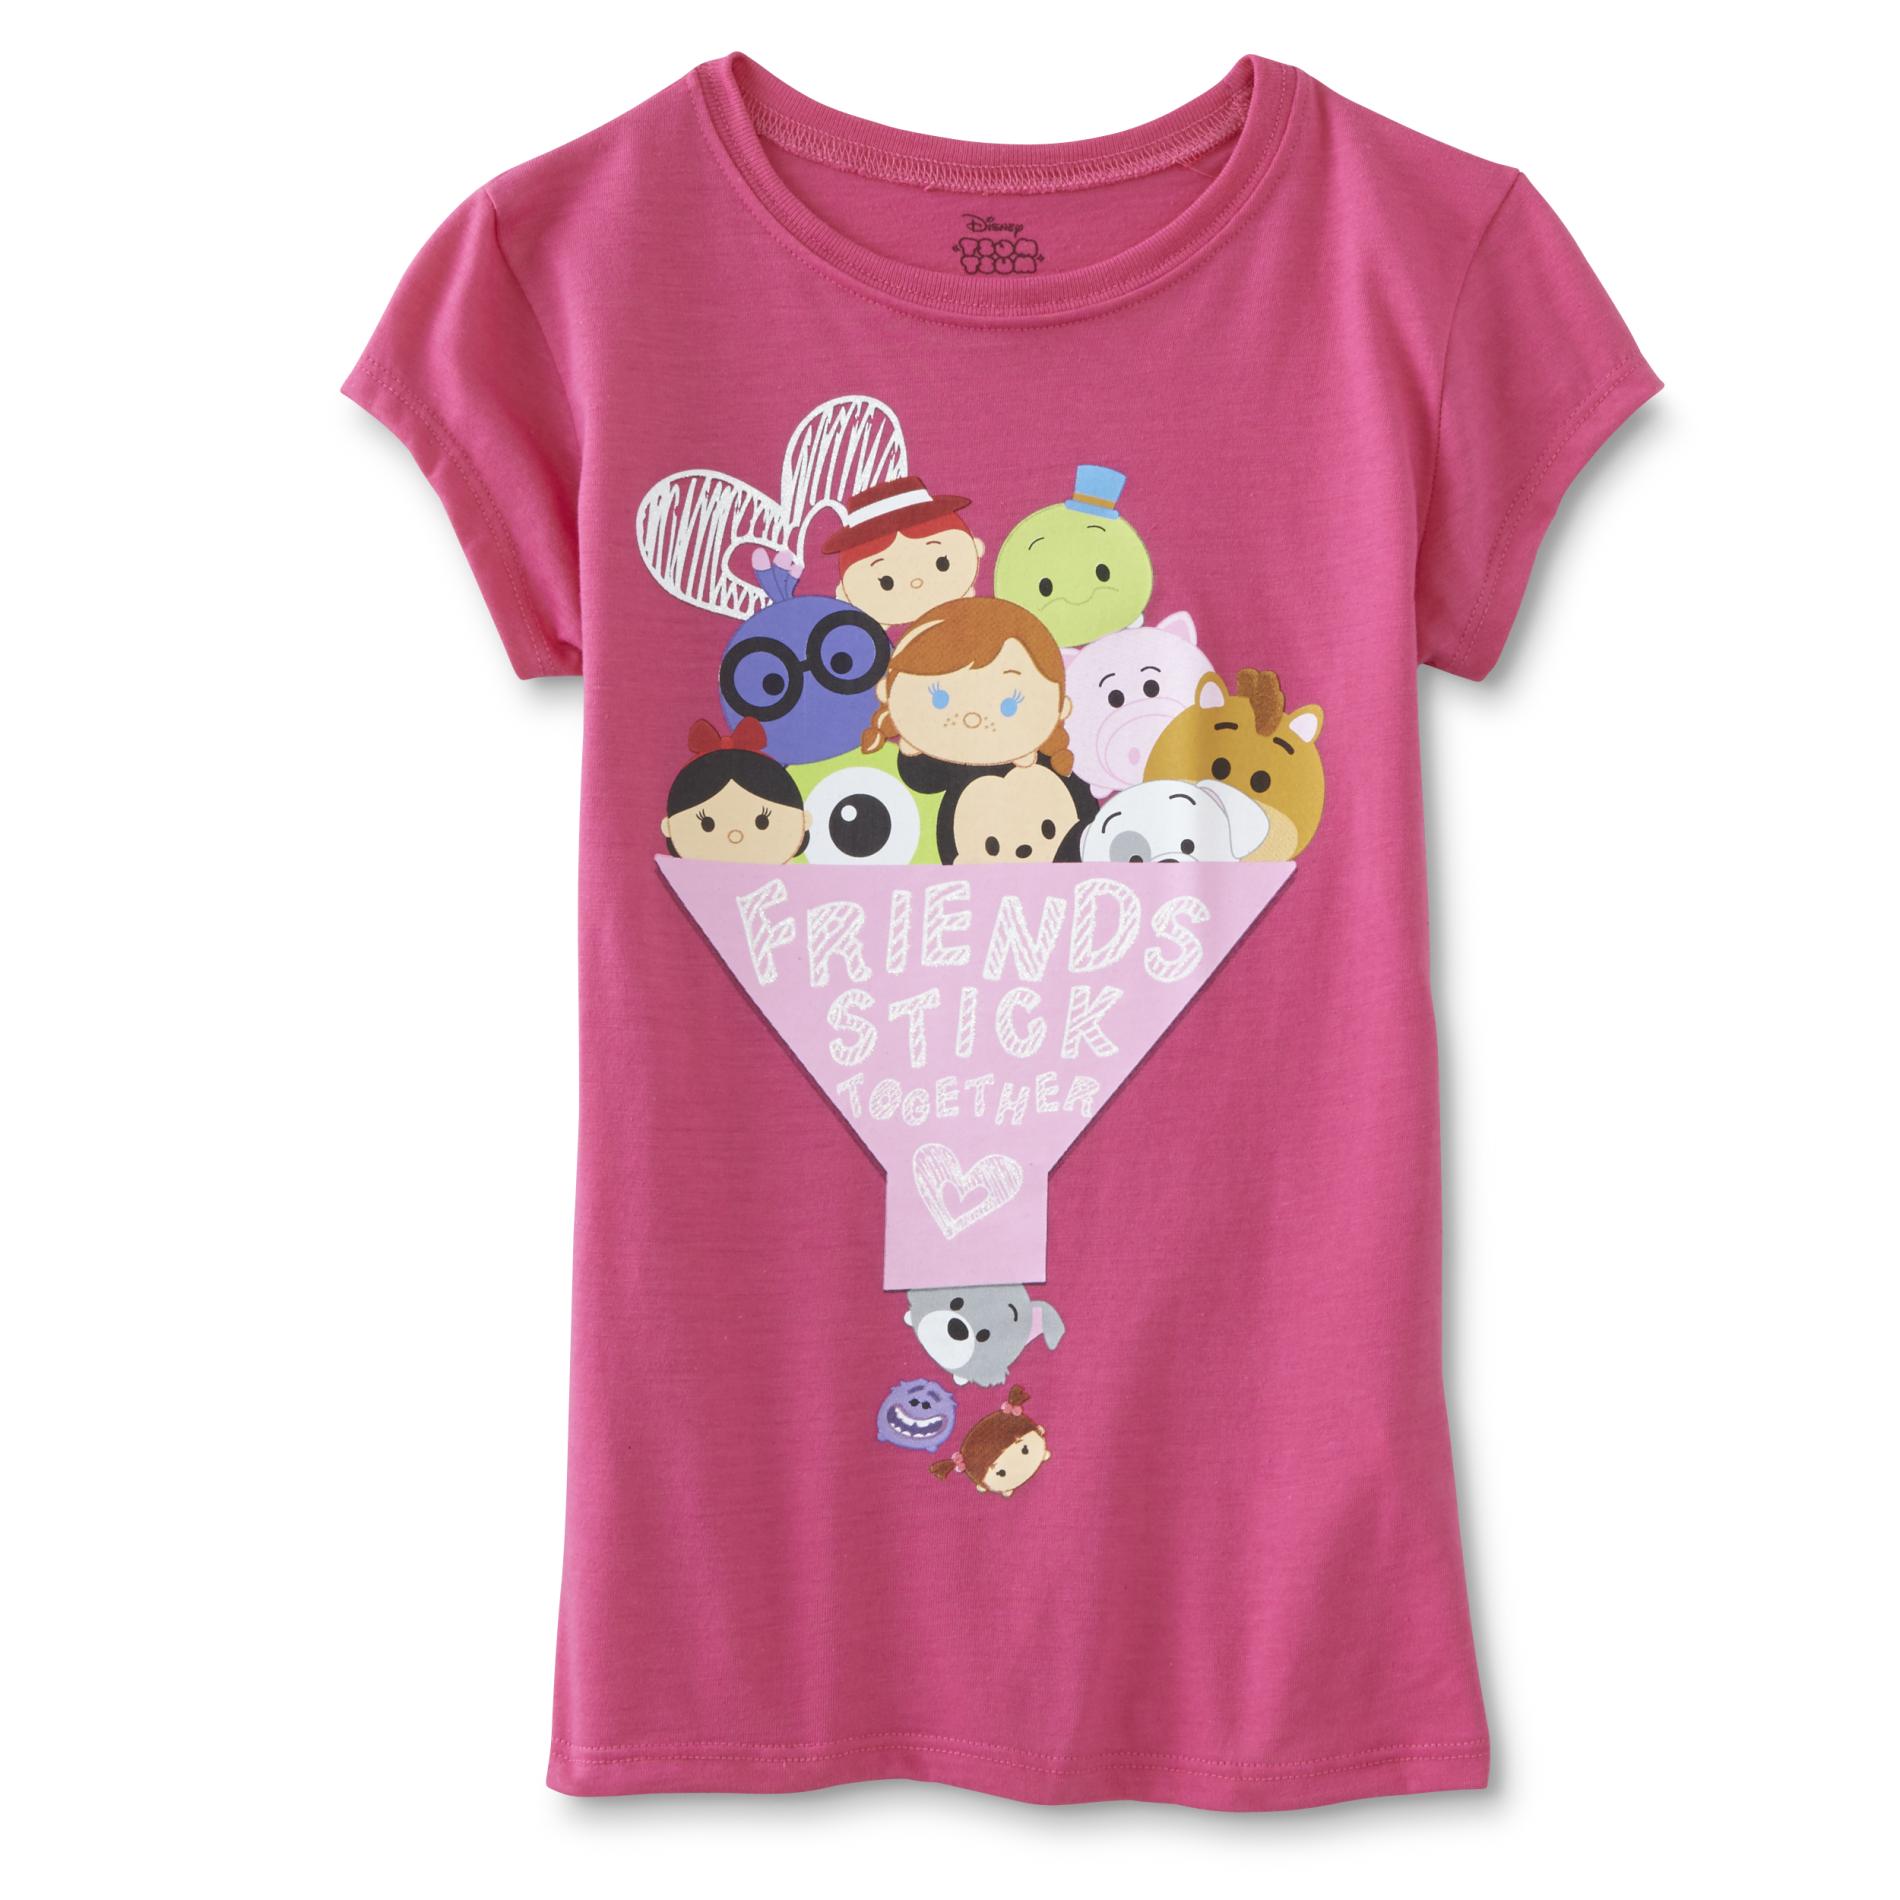 Disney Tsum Tsum Girls' Graphic T-Shirt - Friends